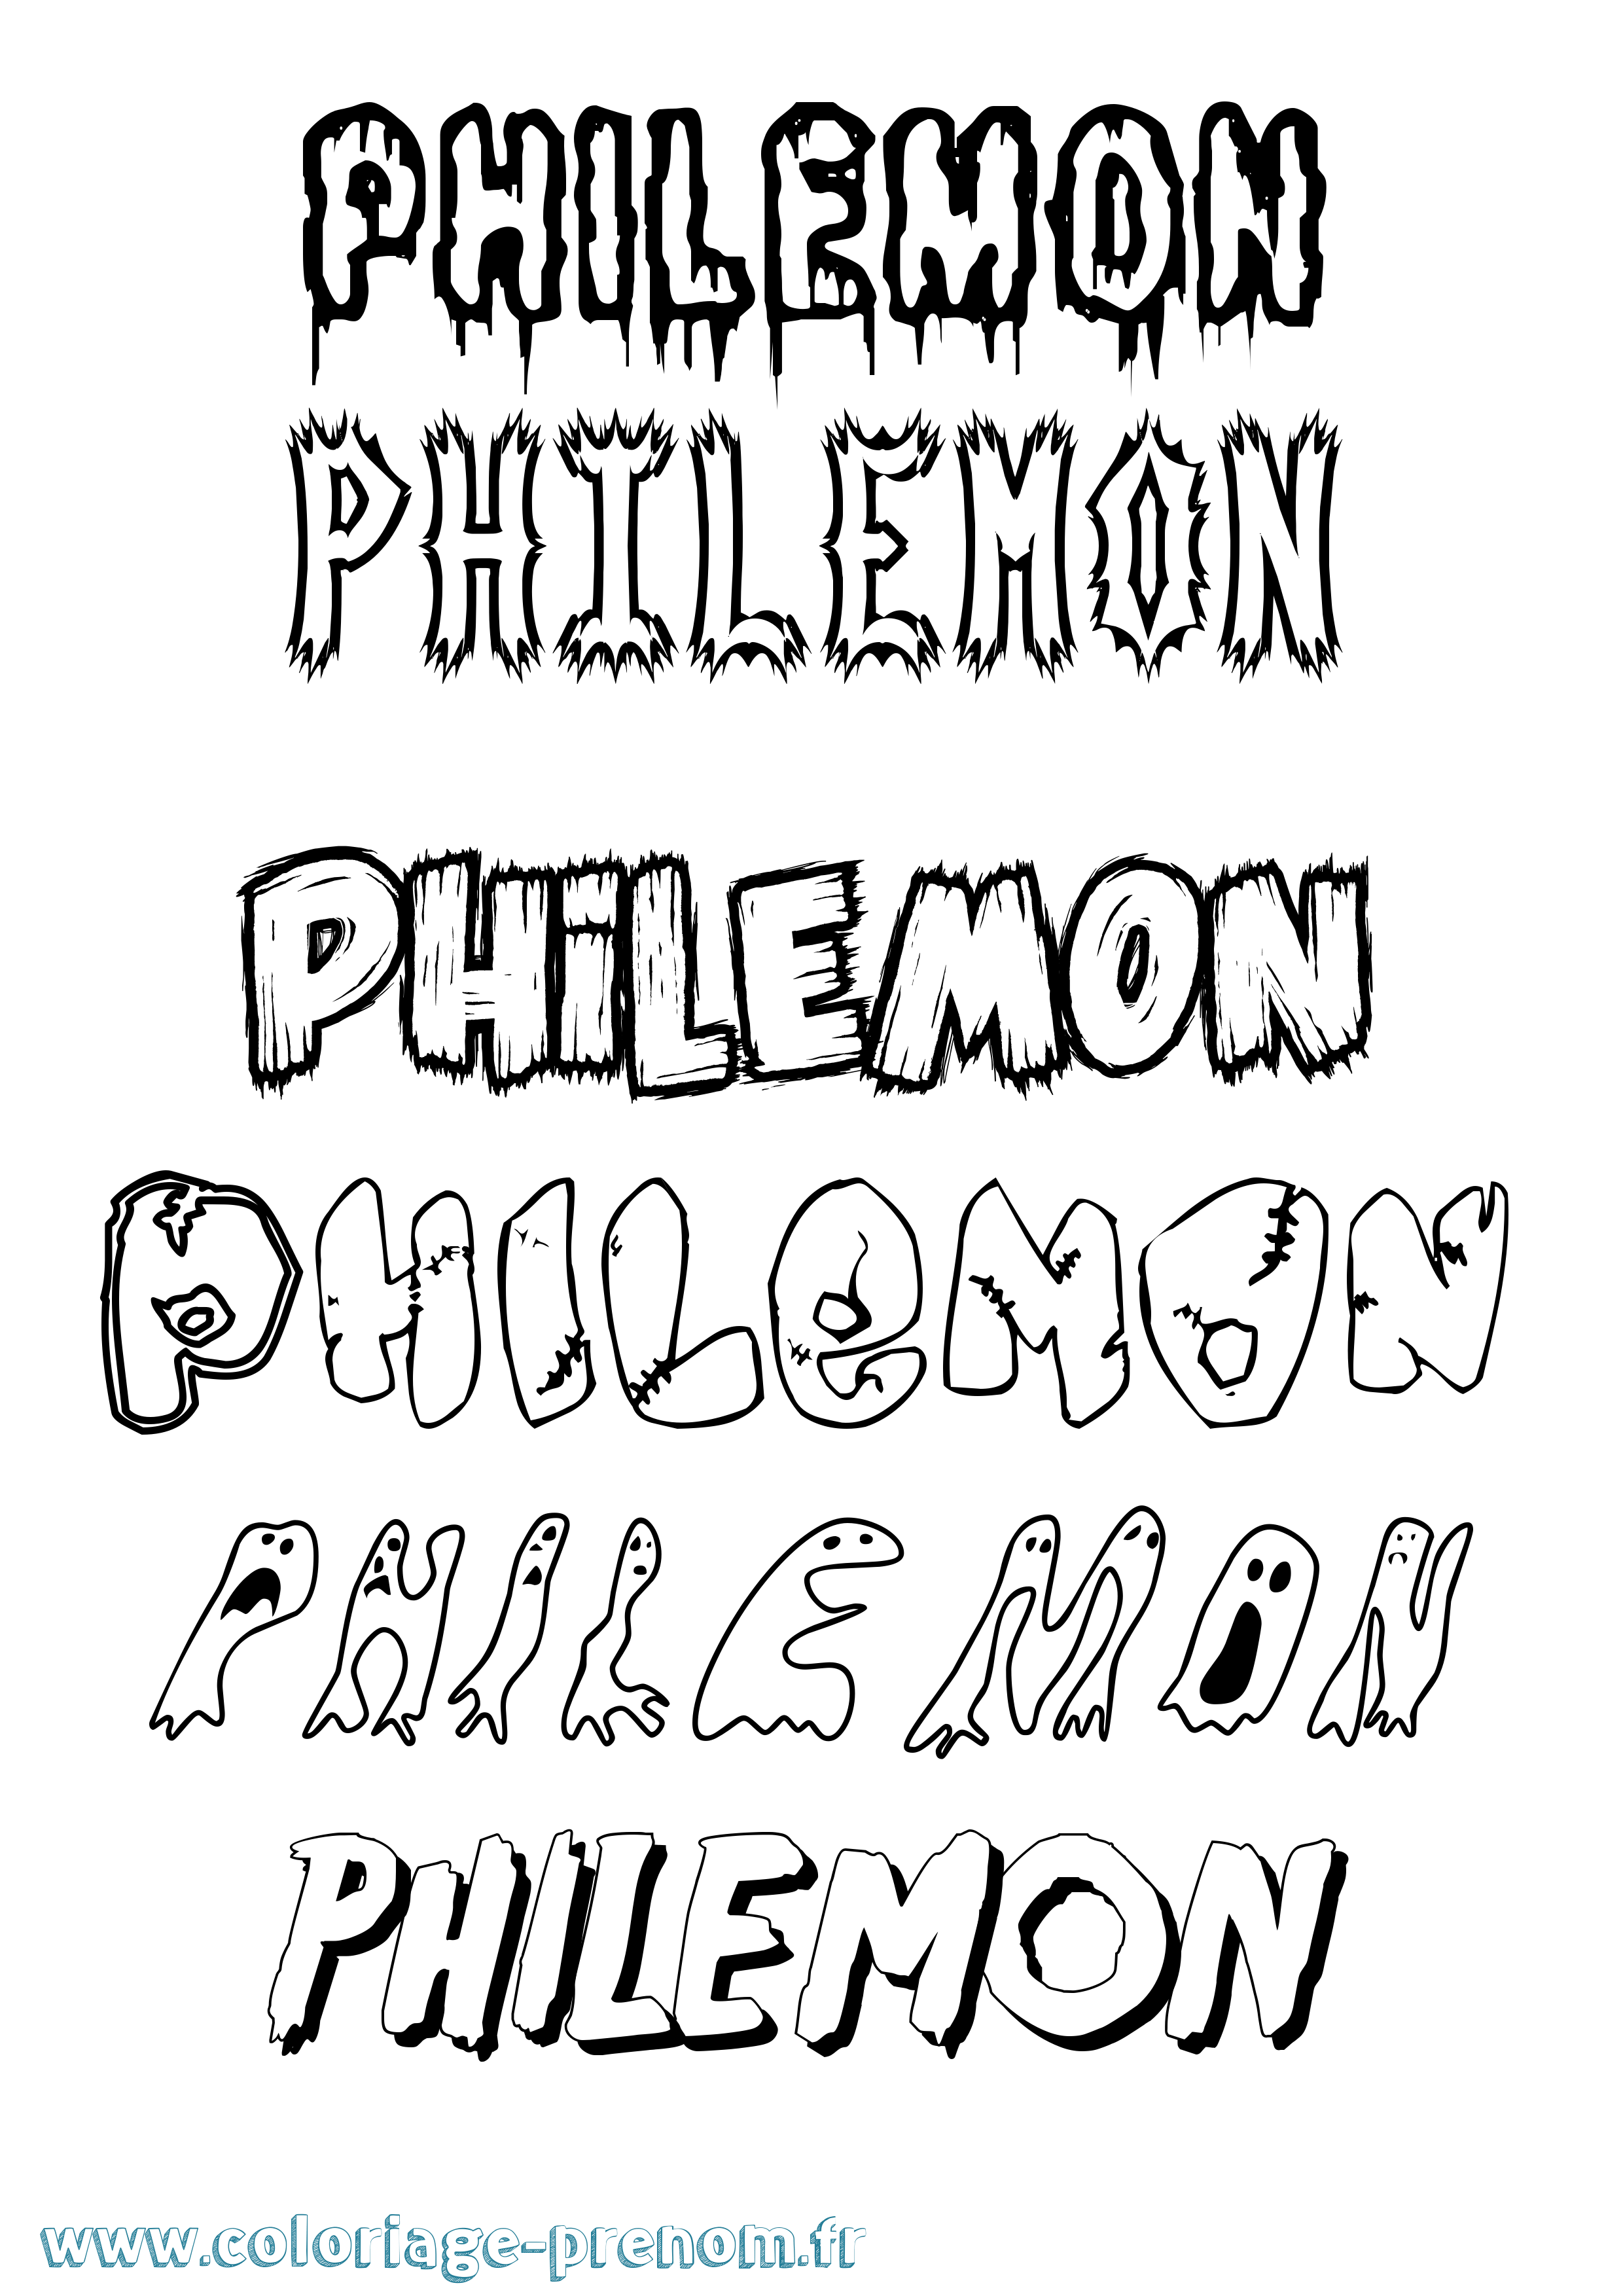 Coloriage prénom Philemon Frisson